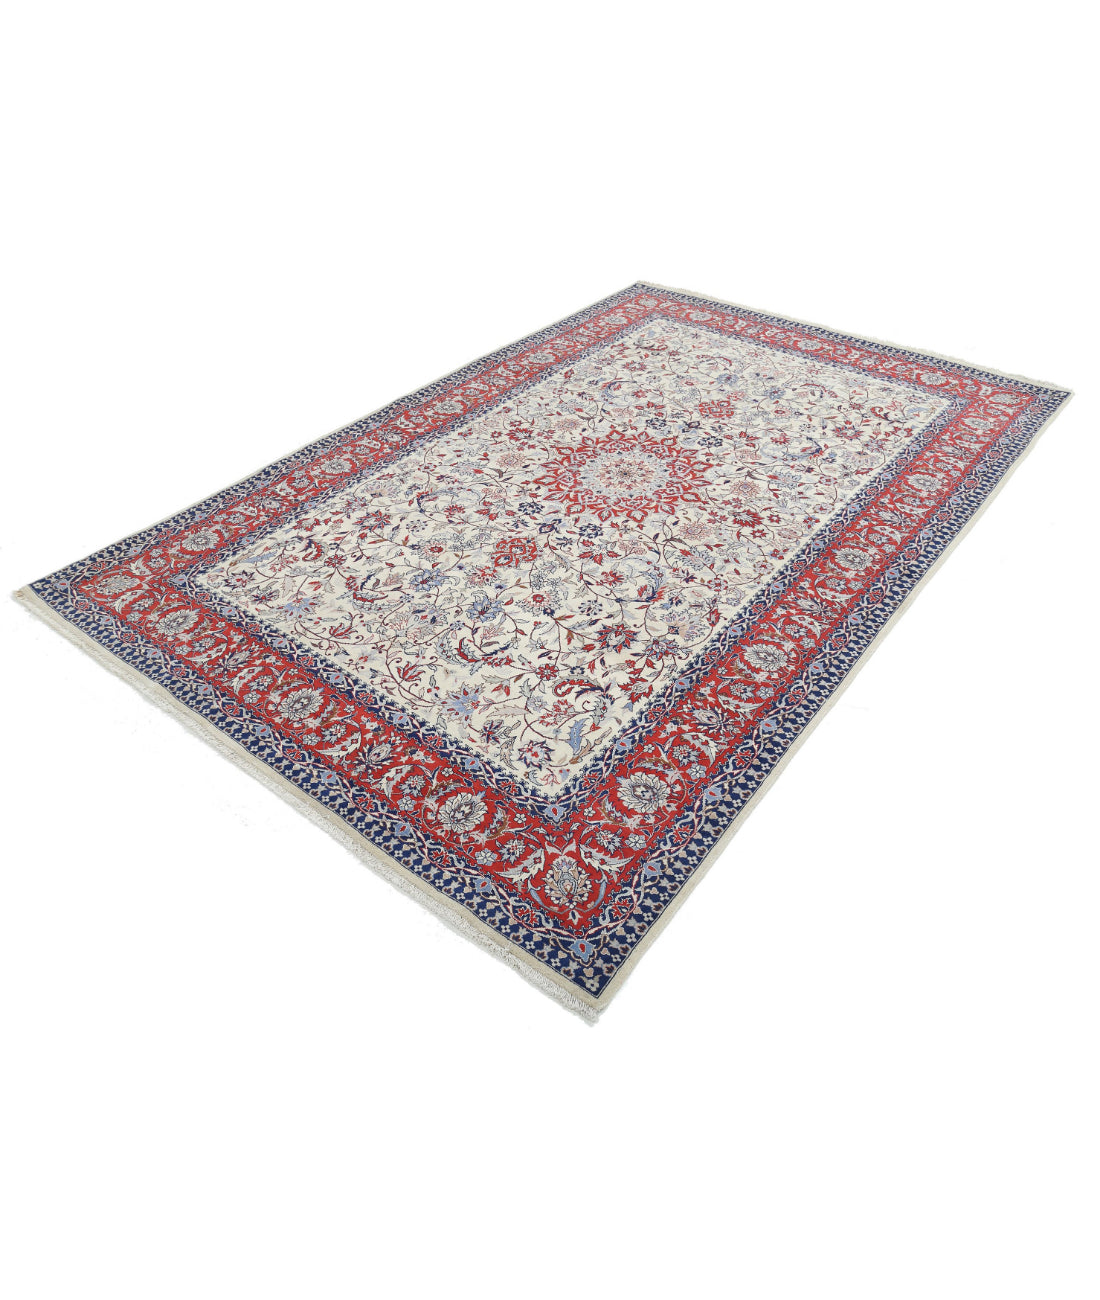 Heritage-hand-knotted-pak-persian-fine-wool-rug-5016554-2.jpg